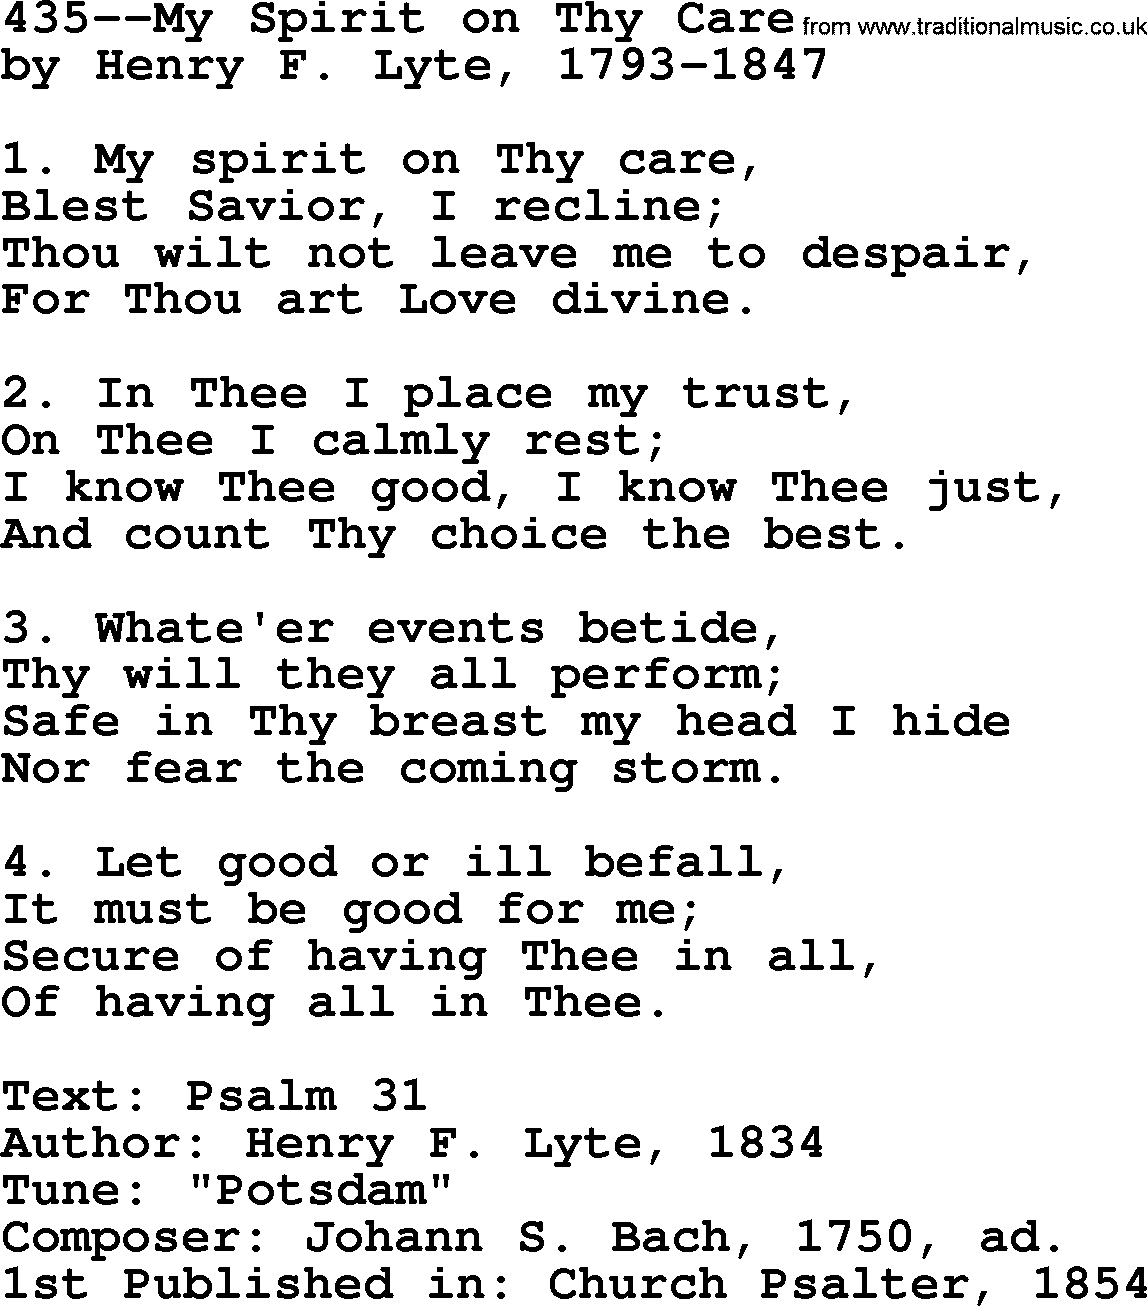 Lutheran Hymn: 435--My Spirit on Thy Care.txt lyrics with PDF